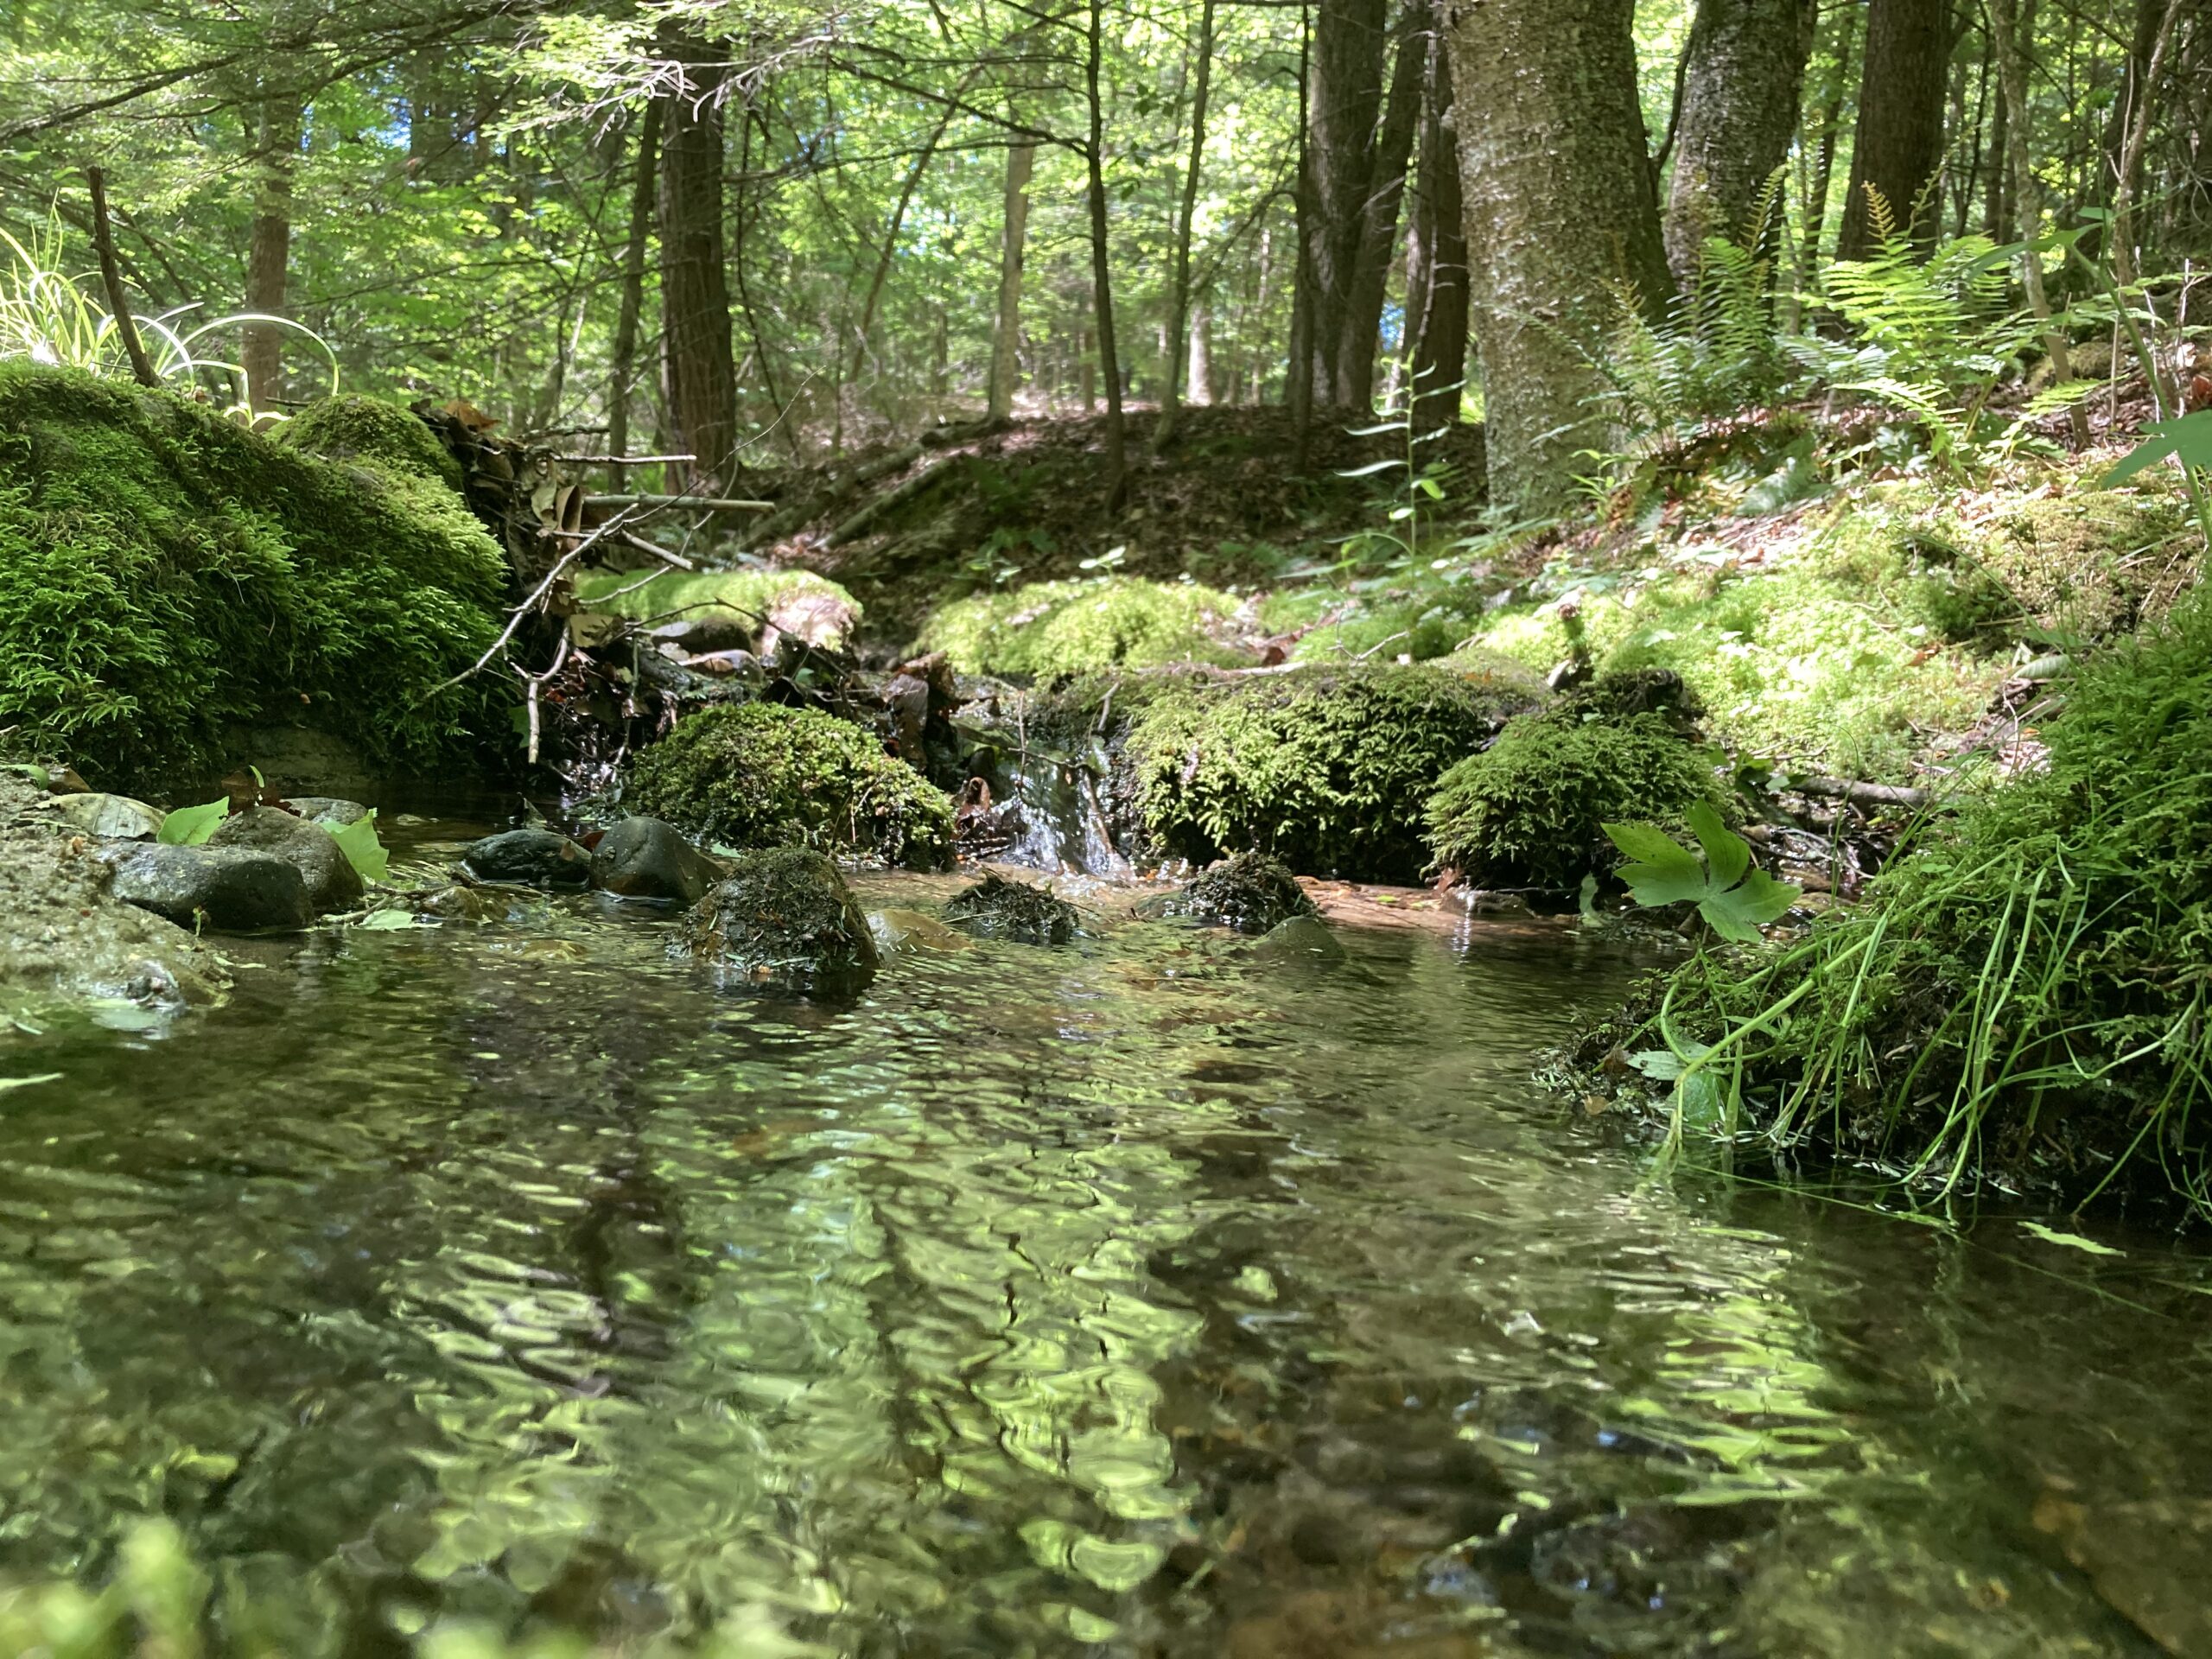 A shady, pebbly stream flows by mossy rocks through a lush green forest.